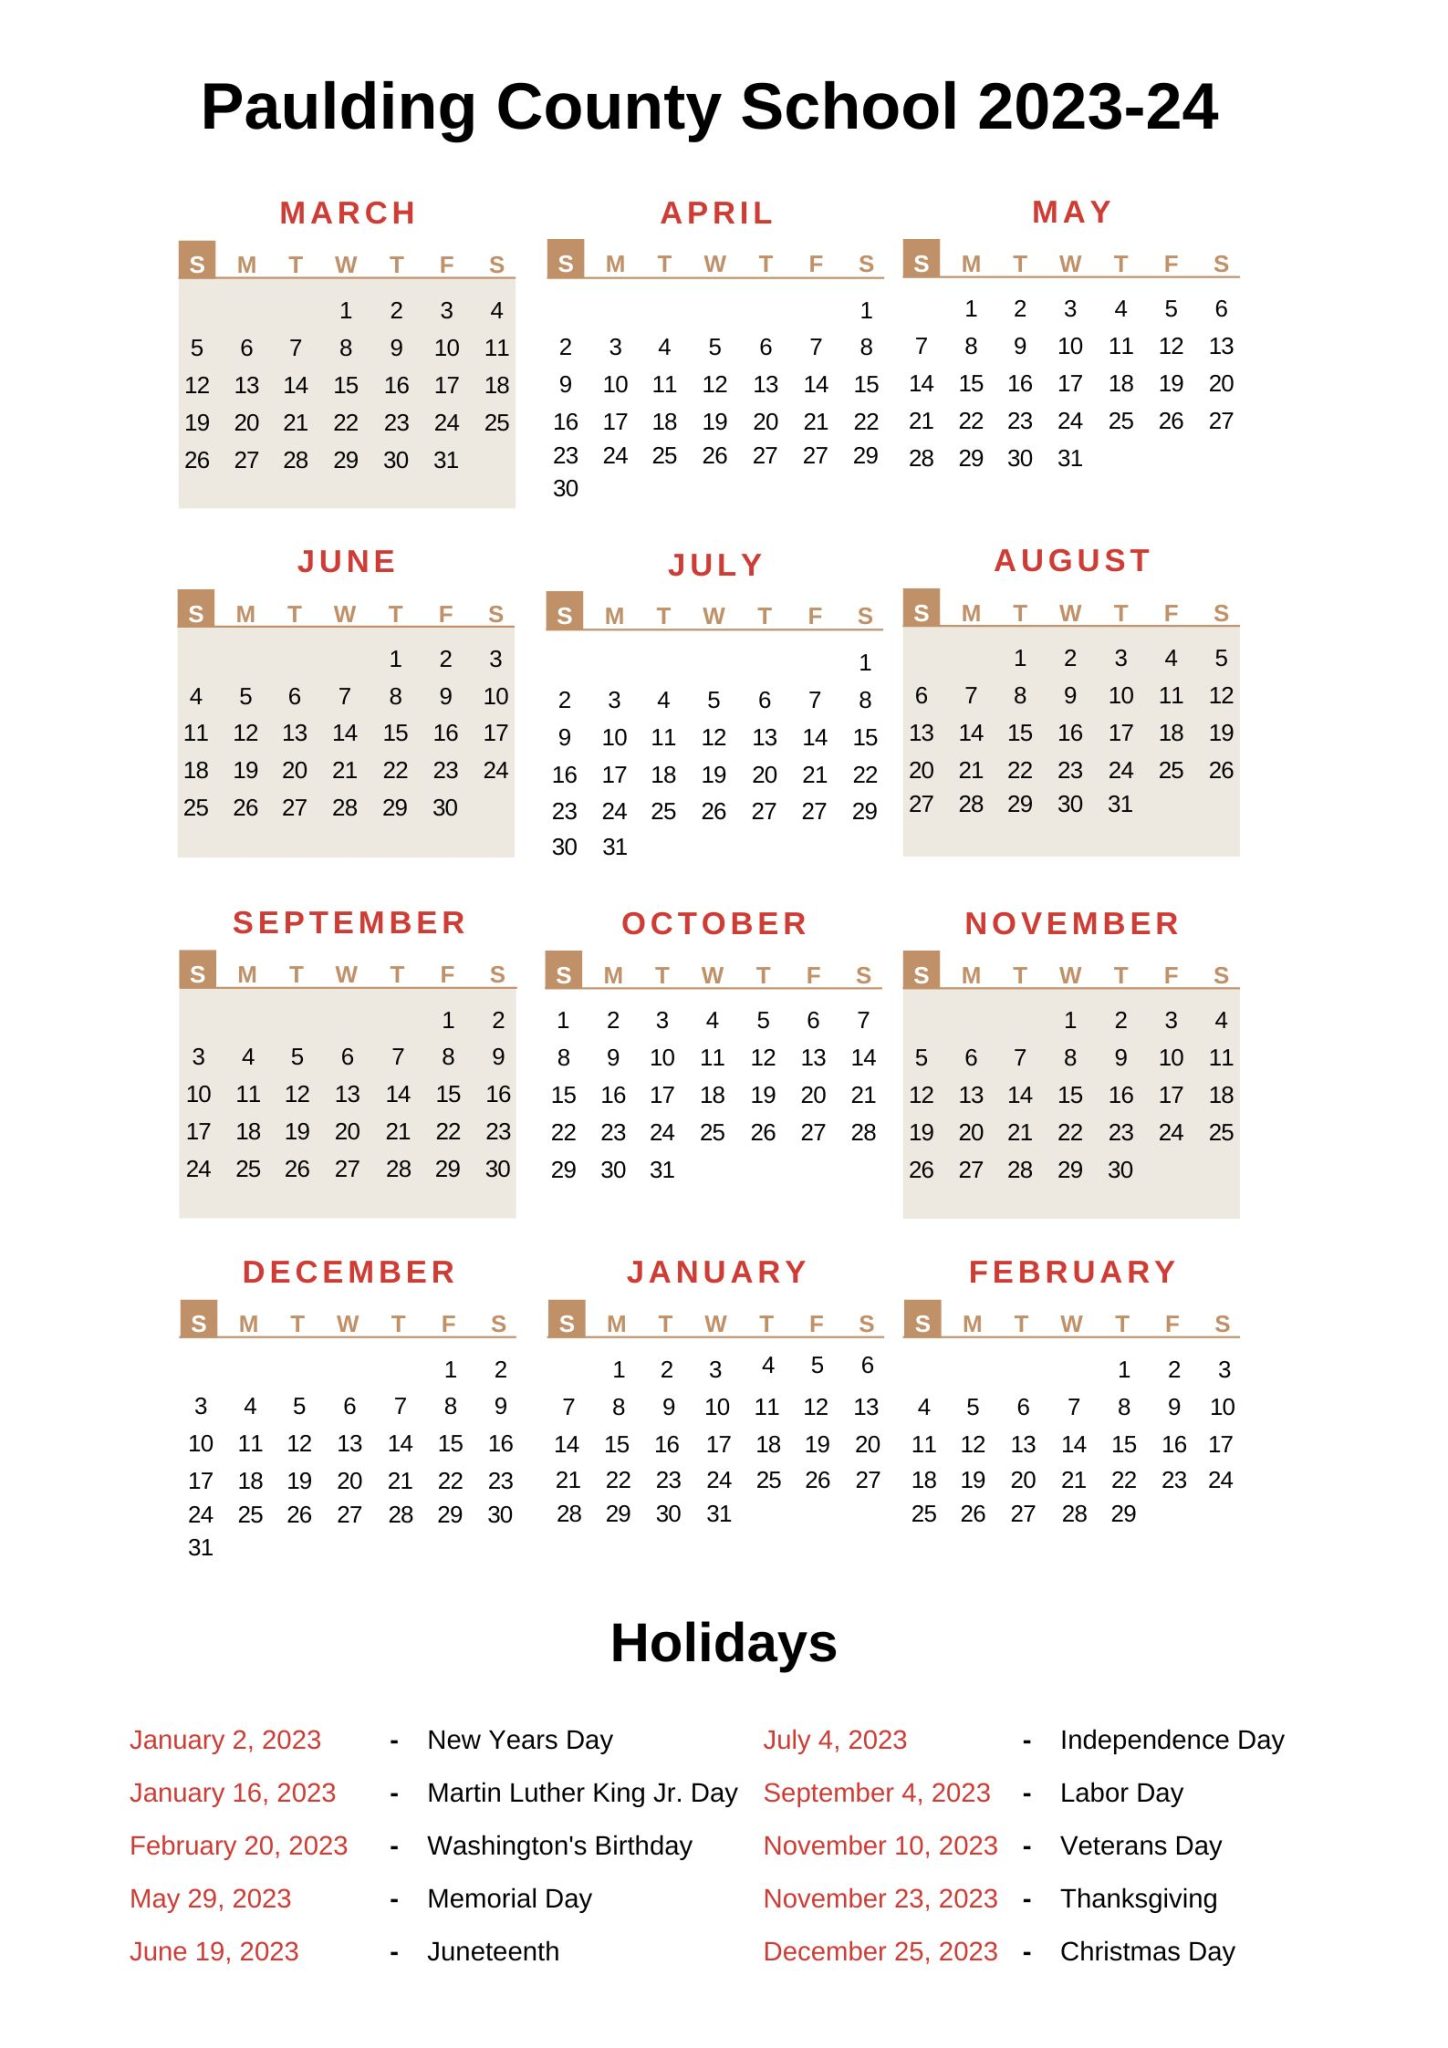 Paulding County Schools Calendar [PCS] 202324 with Holidays